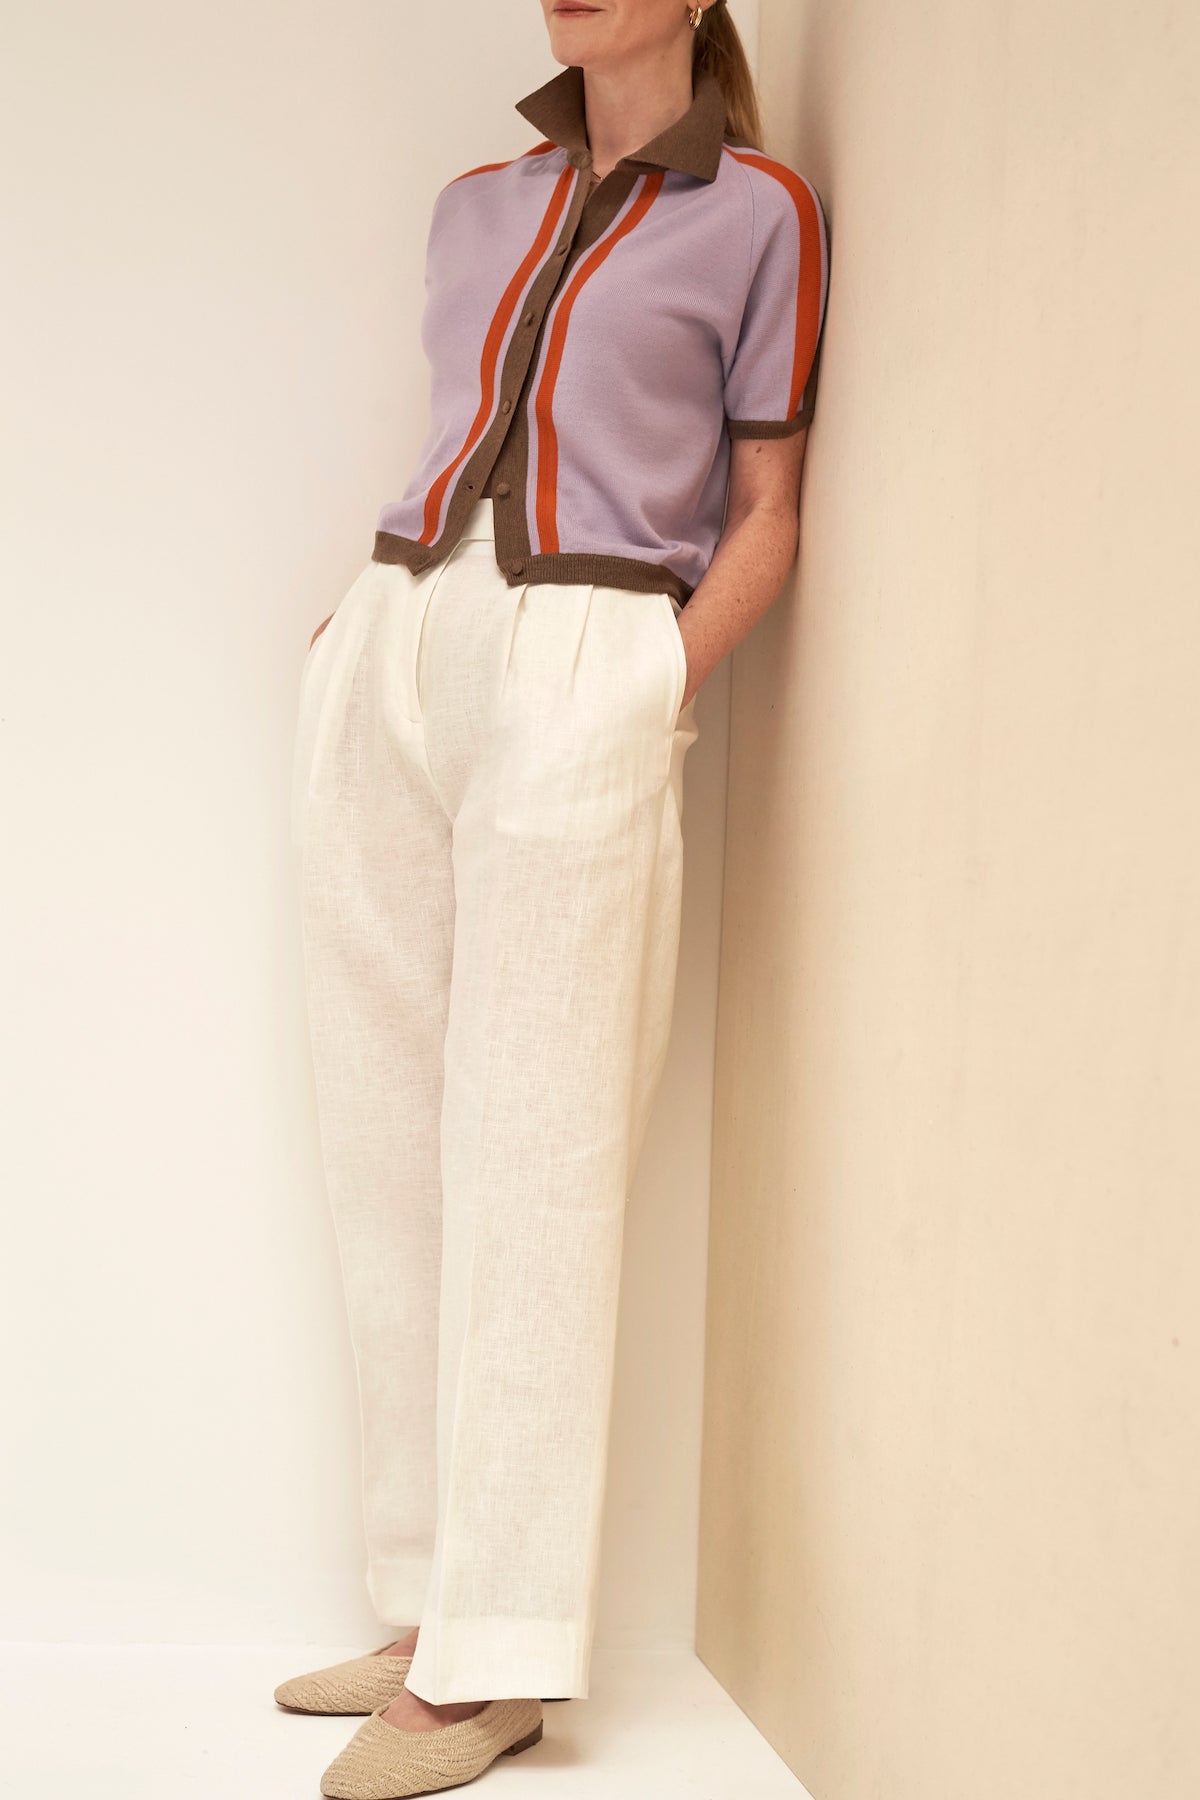 Buy Lyril Lava Fiero Women's Blouse & Trouser Set (Small) at Amazon.in